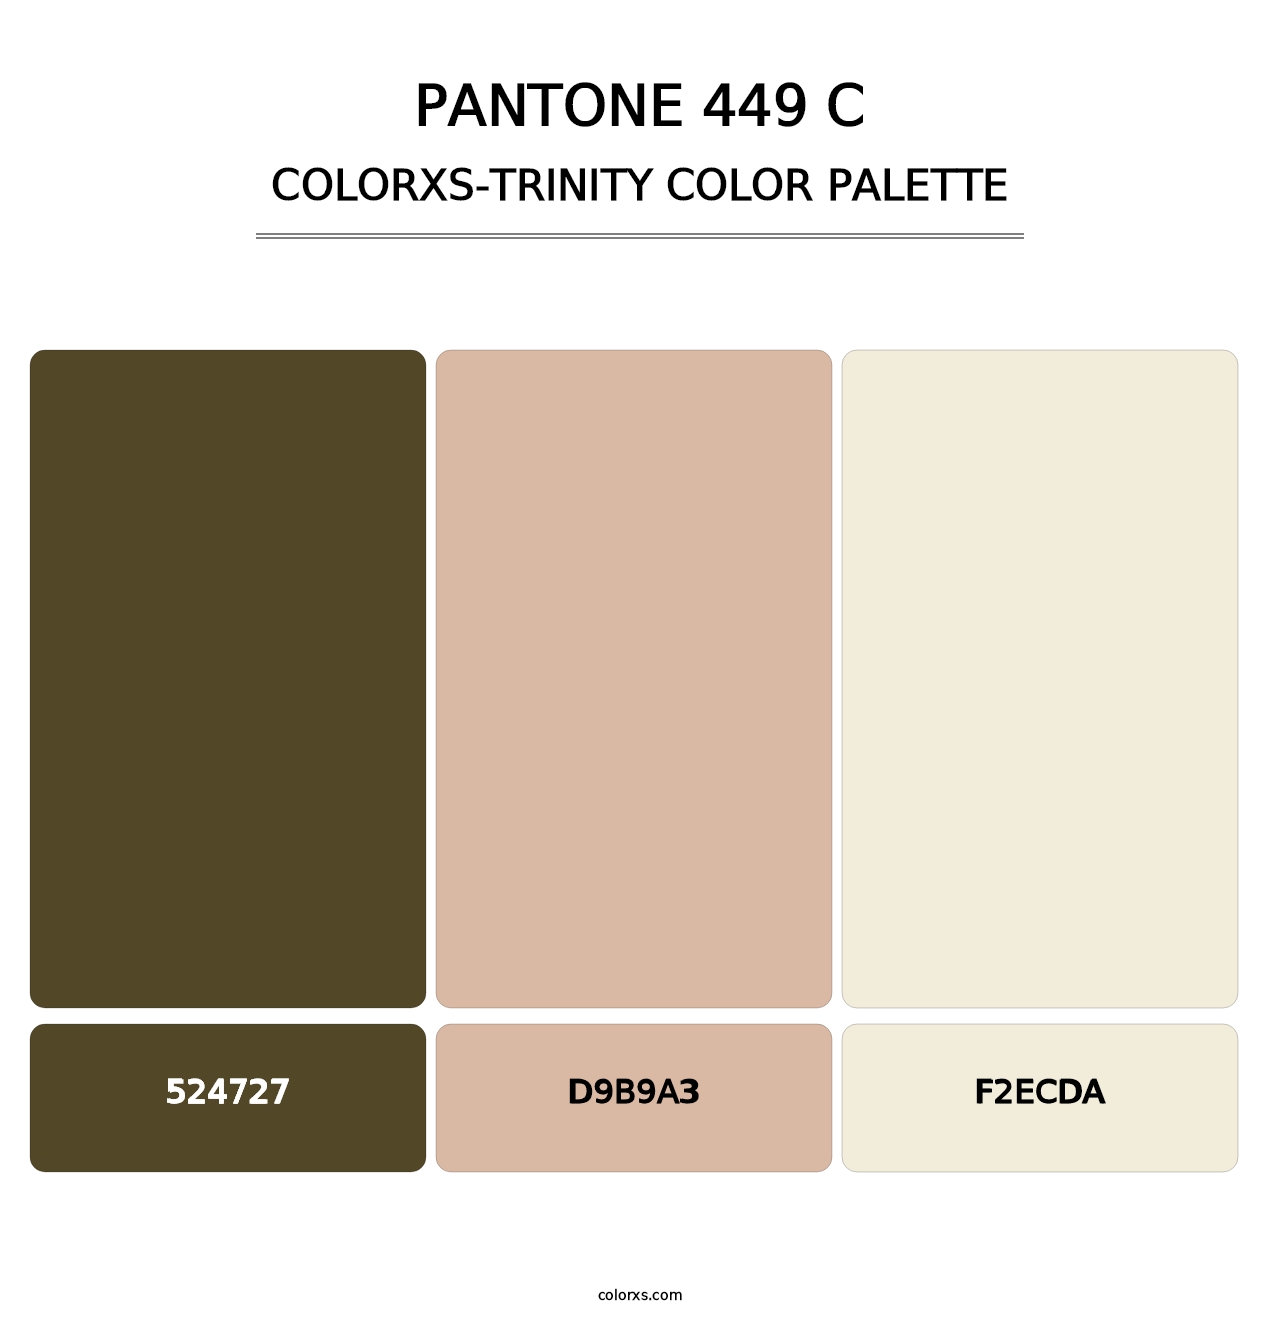 PANTONE 449 C - Colorxs Trinity Palette